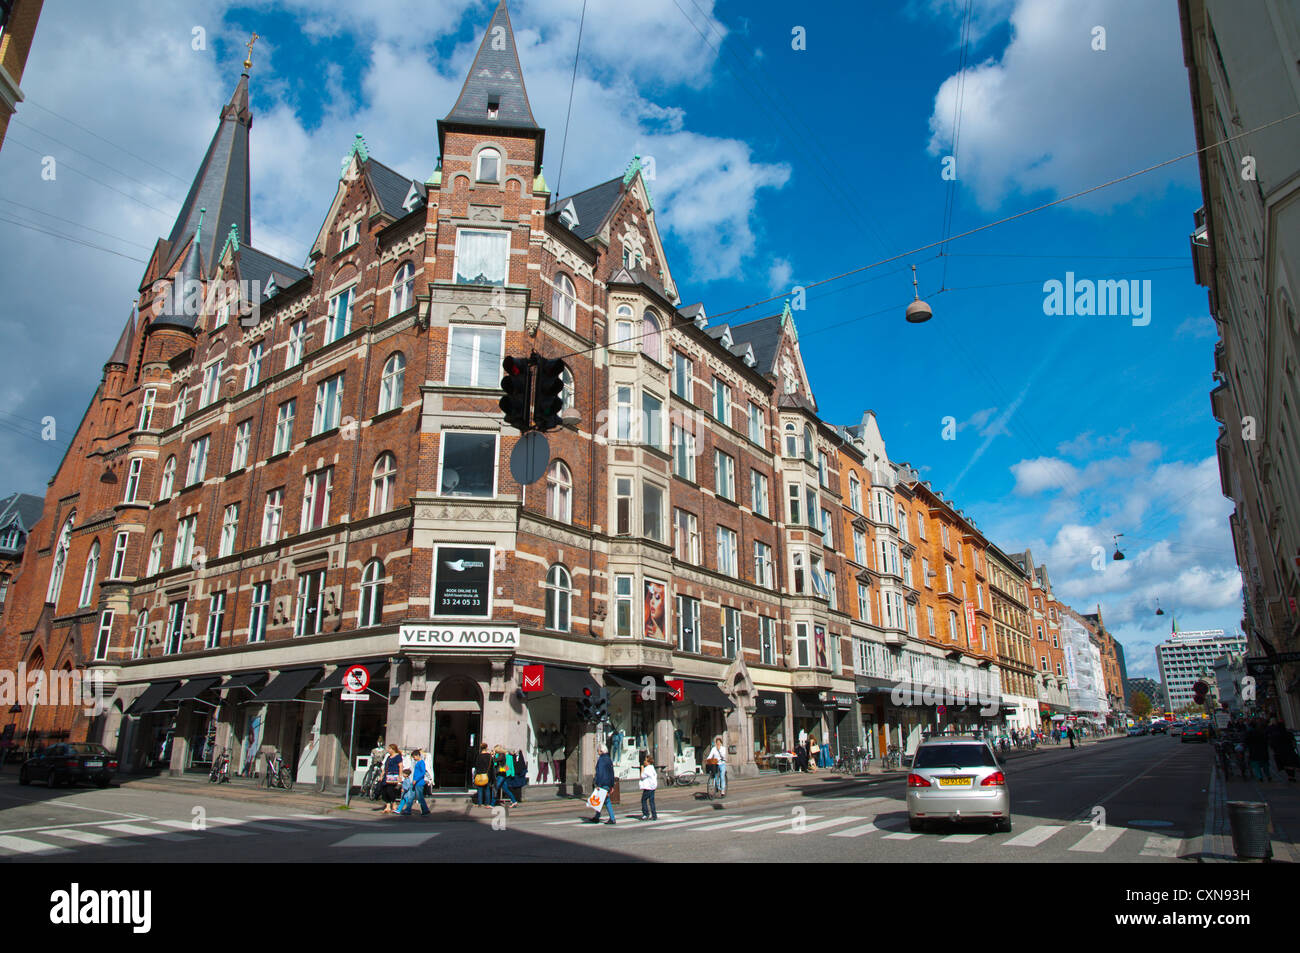 Calle Vesterbrogade central del distrito de Vesterbro Copenhague Dinamarca Europa Foto de stock